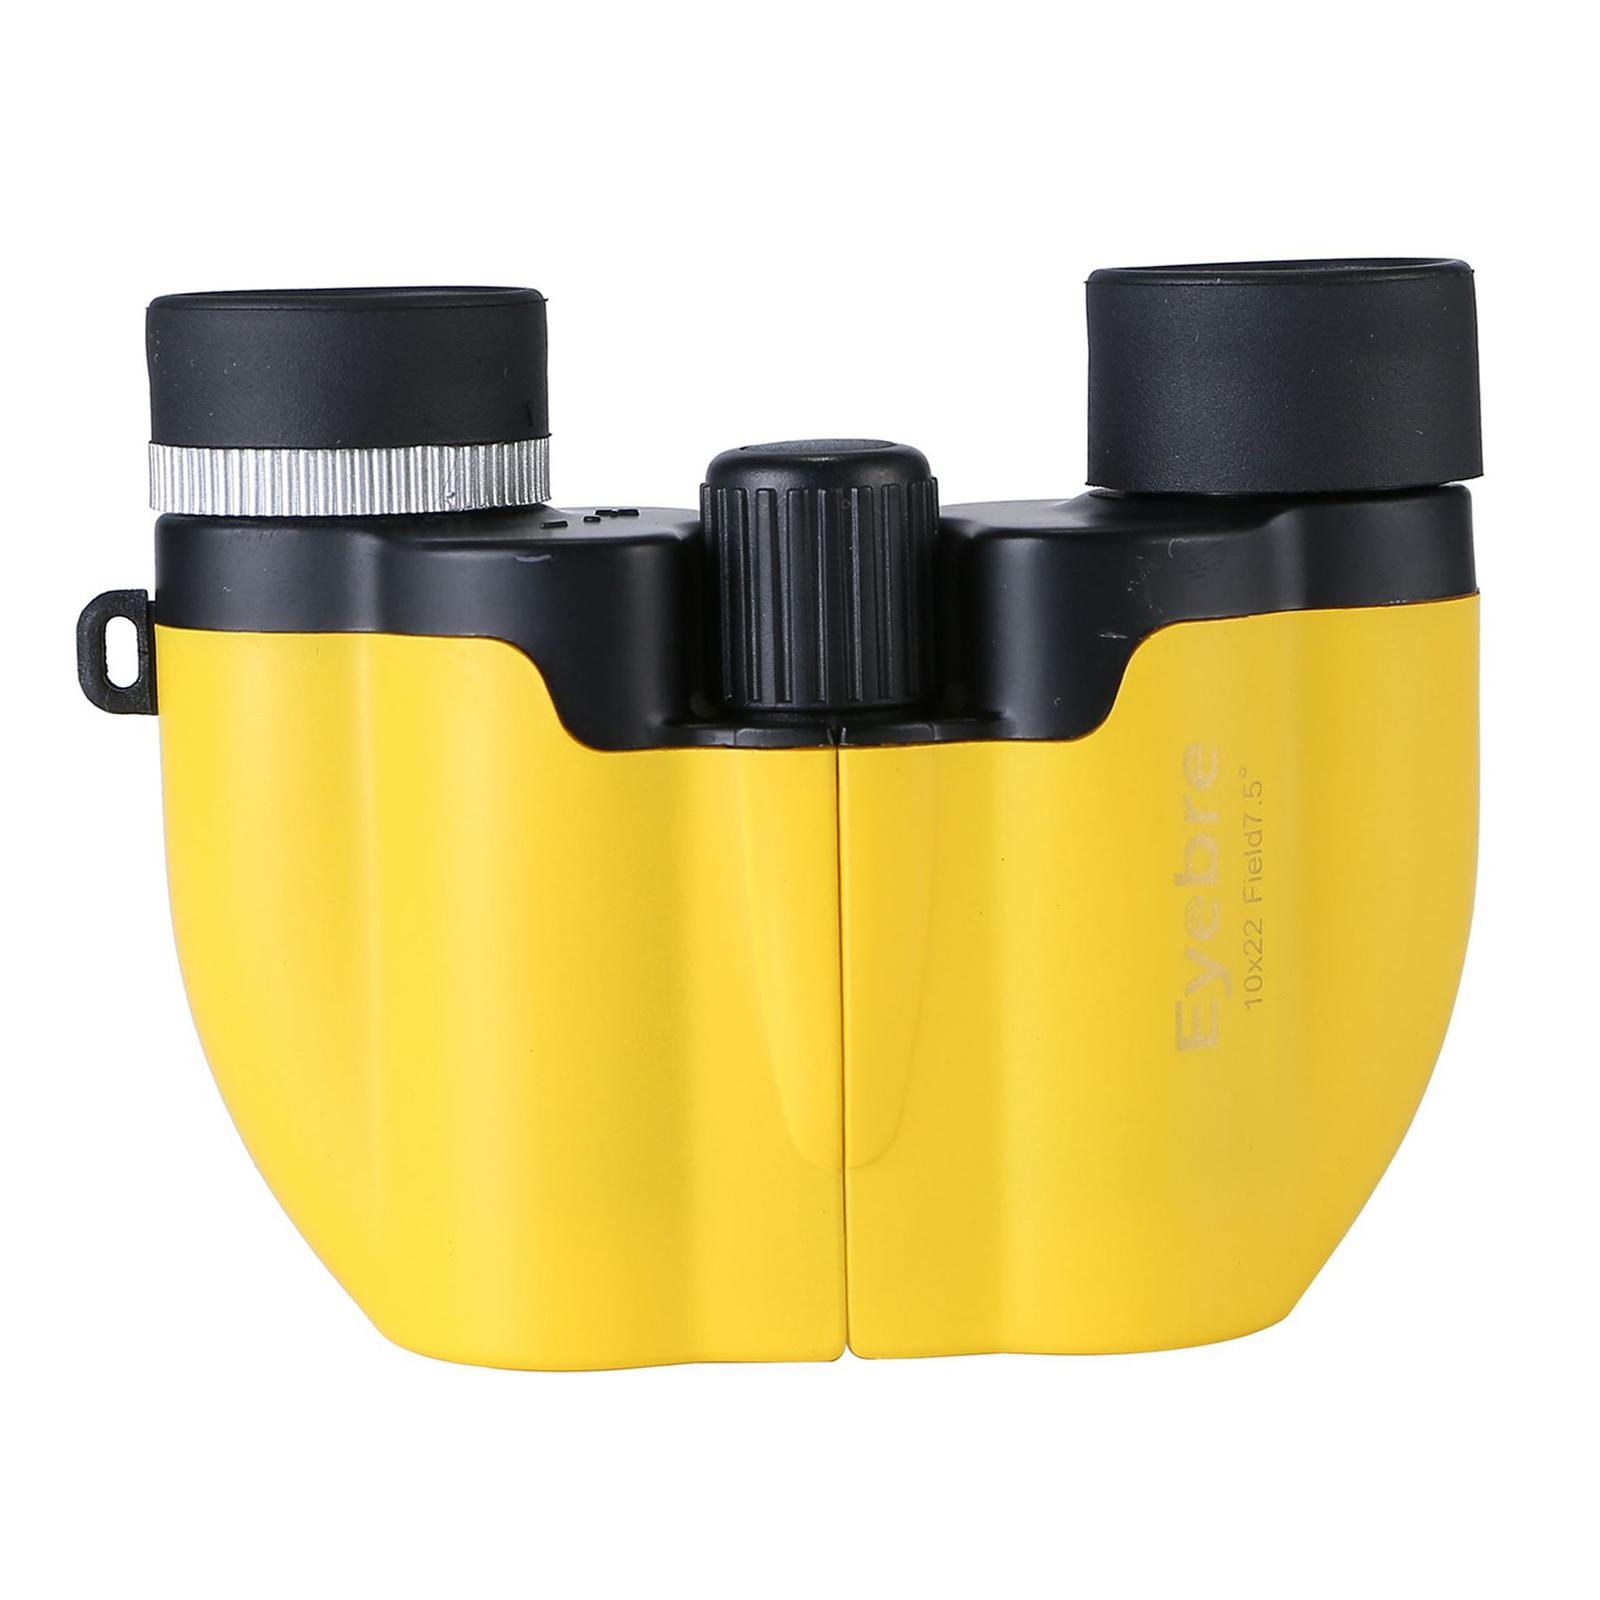 Binoculars Compact Lightweight Small for Bird Watching Outdoor Yellow